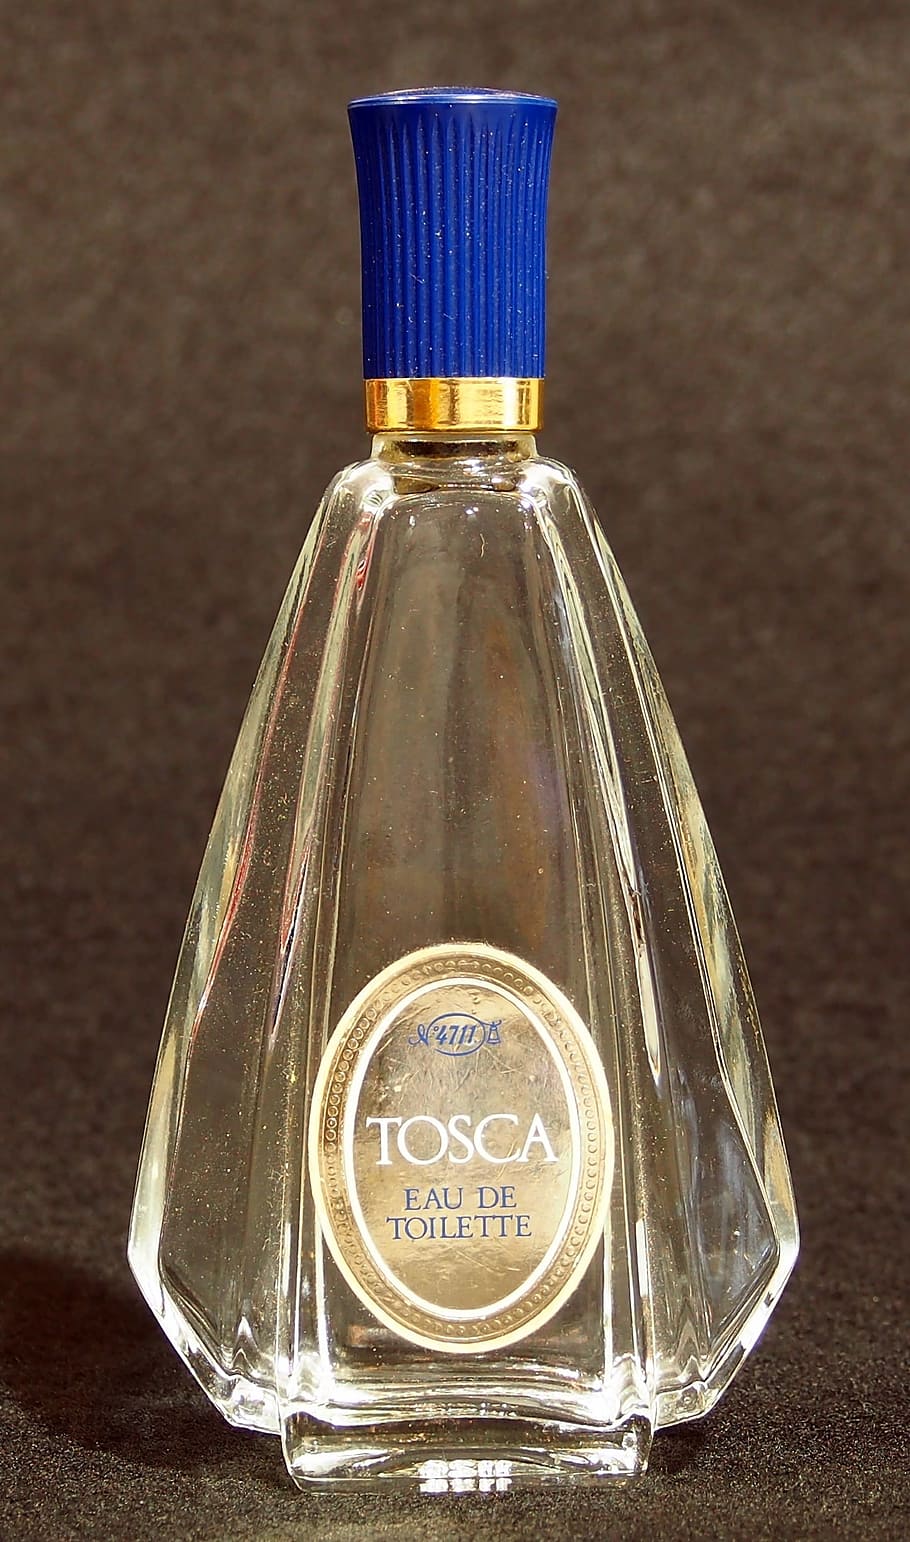 Tosca, parfum, botol, vintage, aroma, penting, bahan, bau, sprayer parfum, wangi